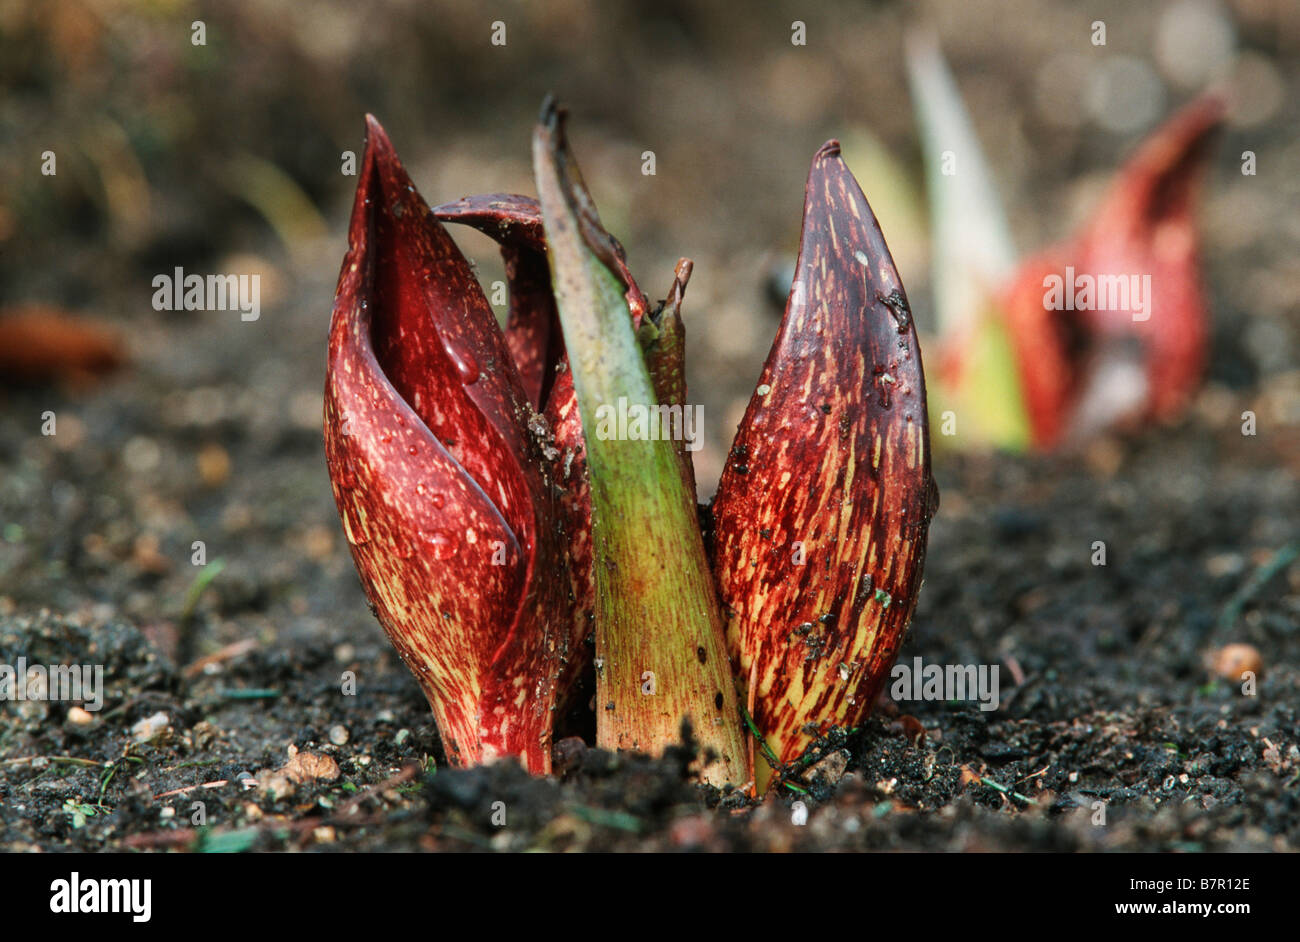 skunk cabbage (Symplocarpus foetidus), shoot Stock Photo